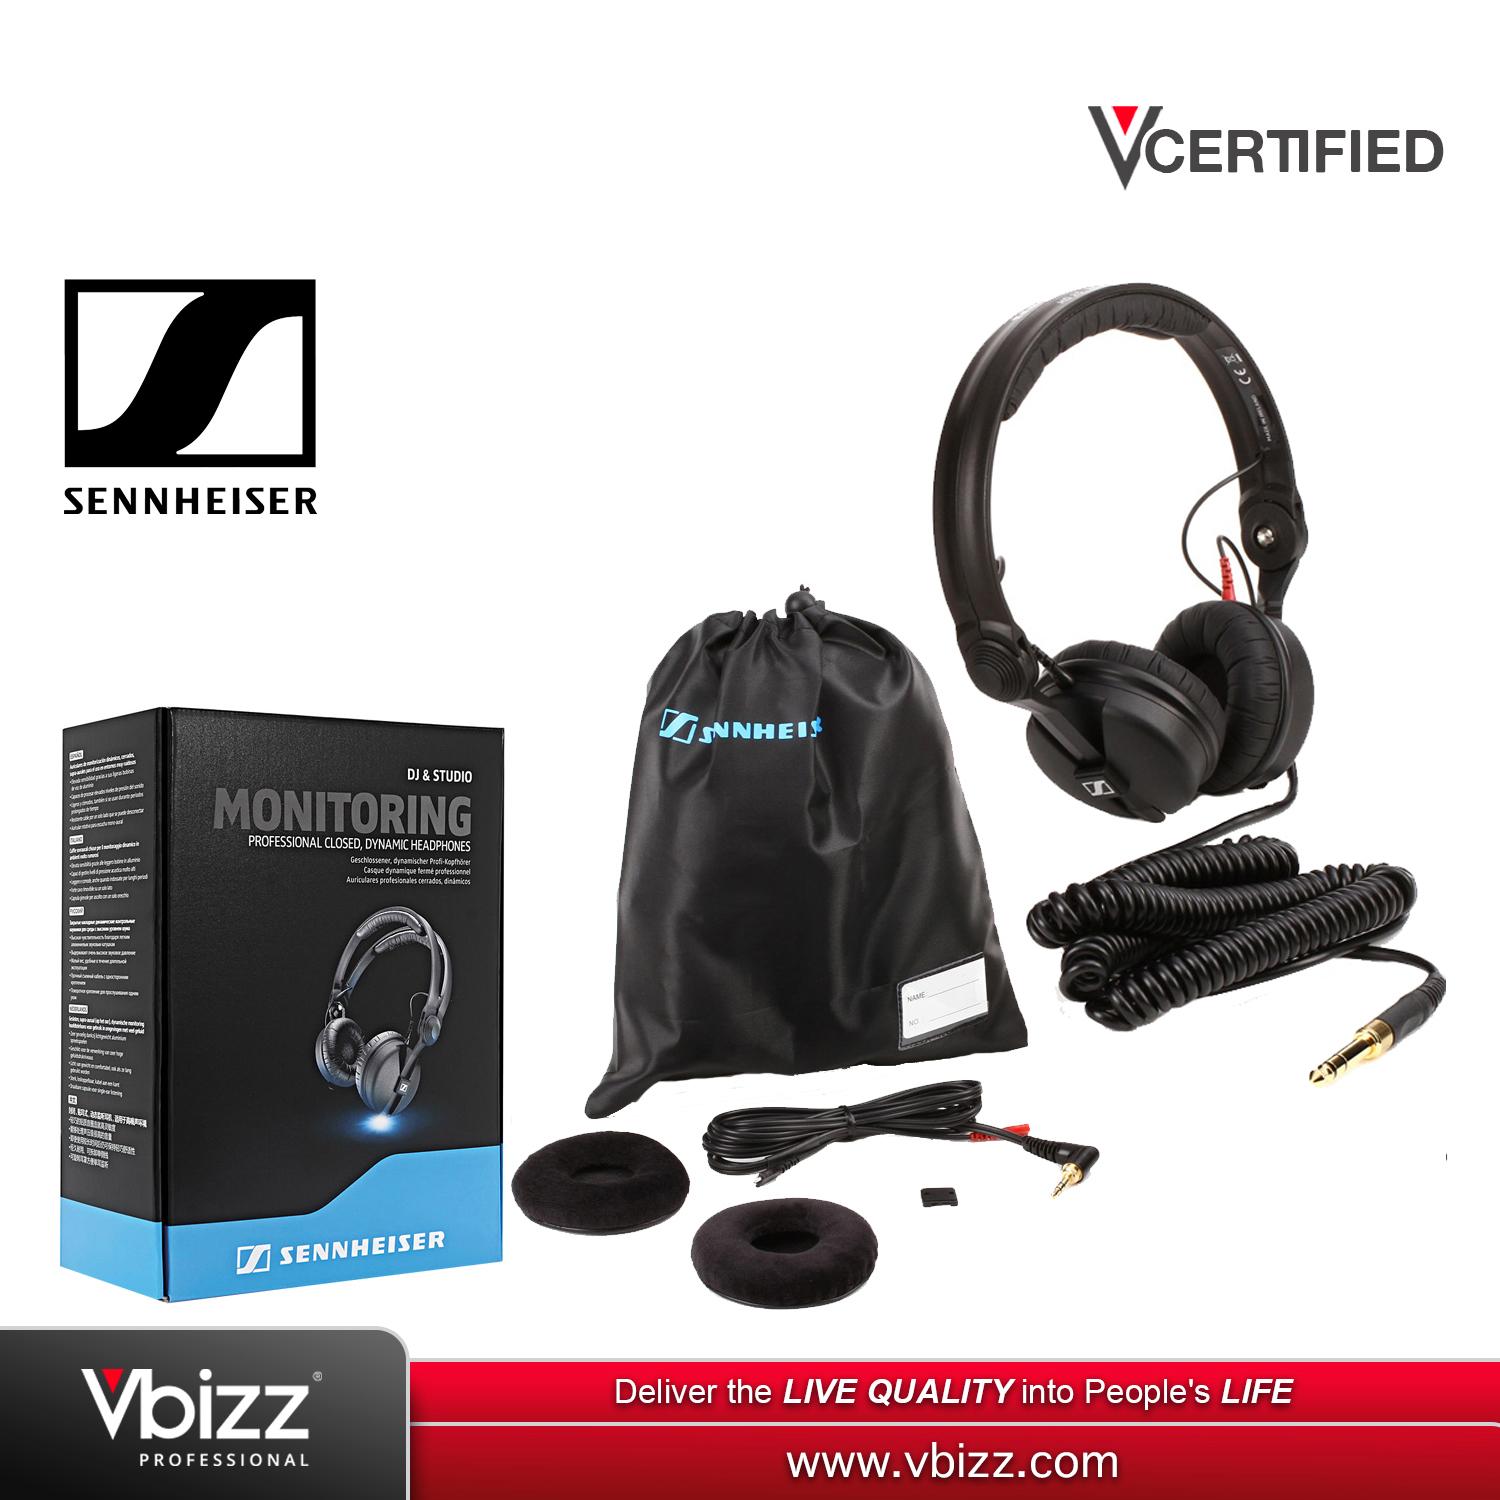 Sennheiser HD 25 Closed-back On-ear Studio Headphones